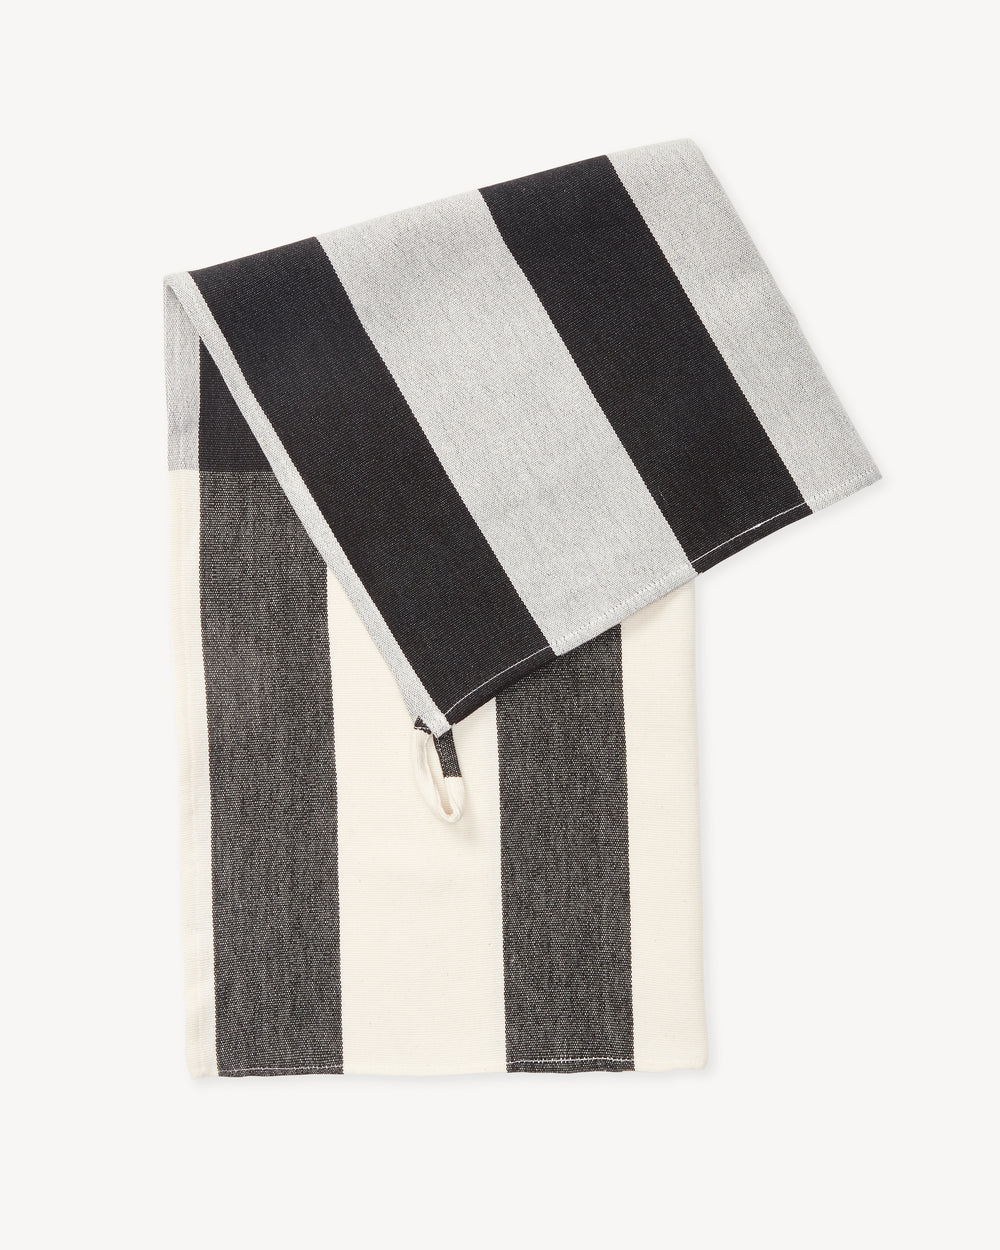 Black Striped Porticcio Belgian Linen Kitchen Tea Towel